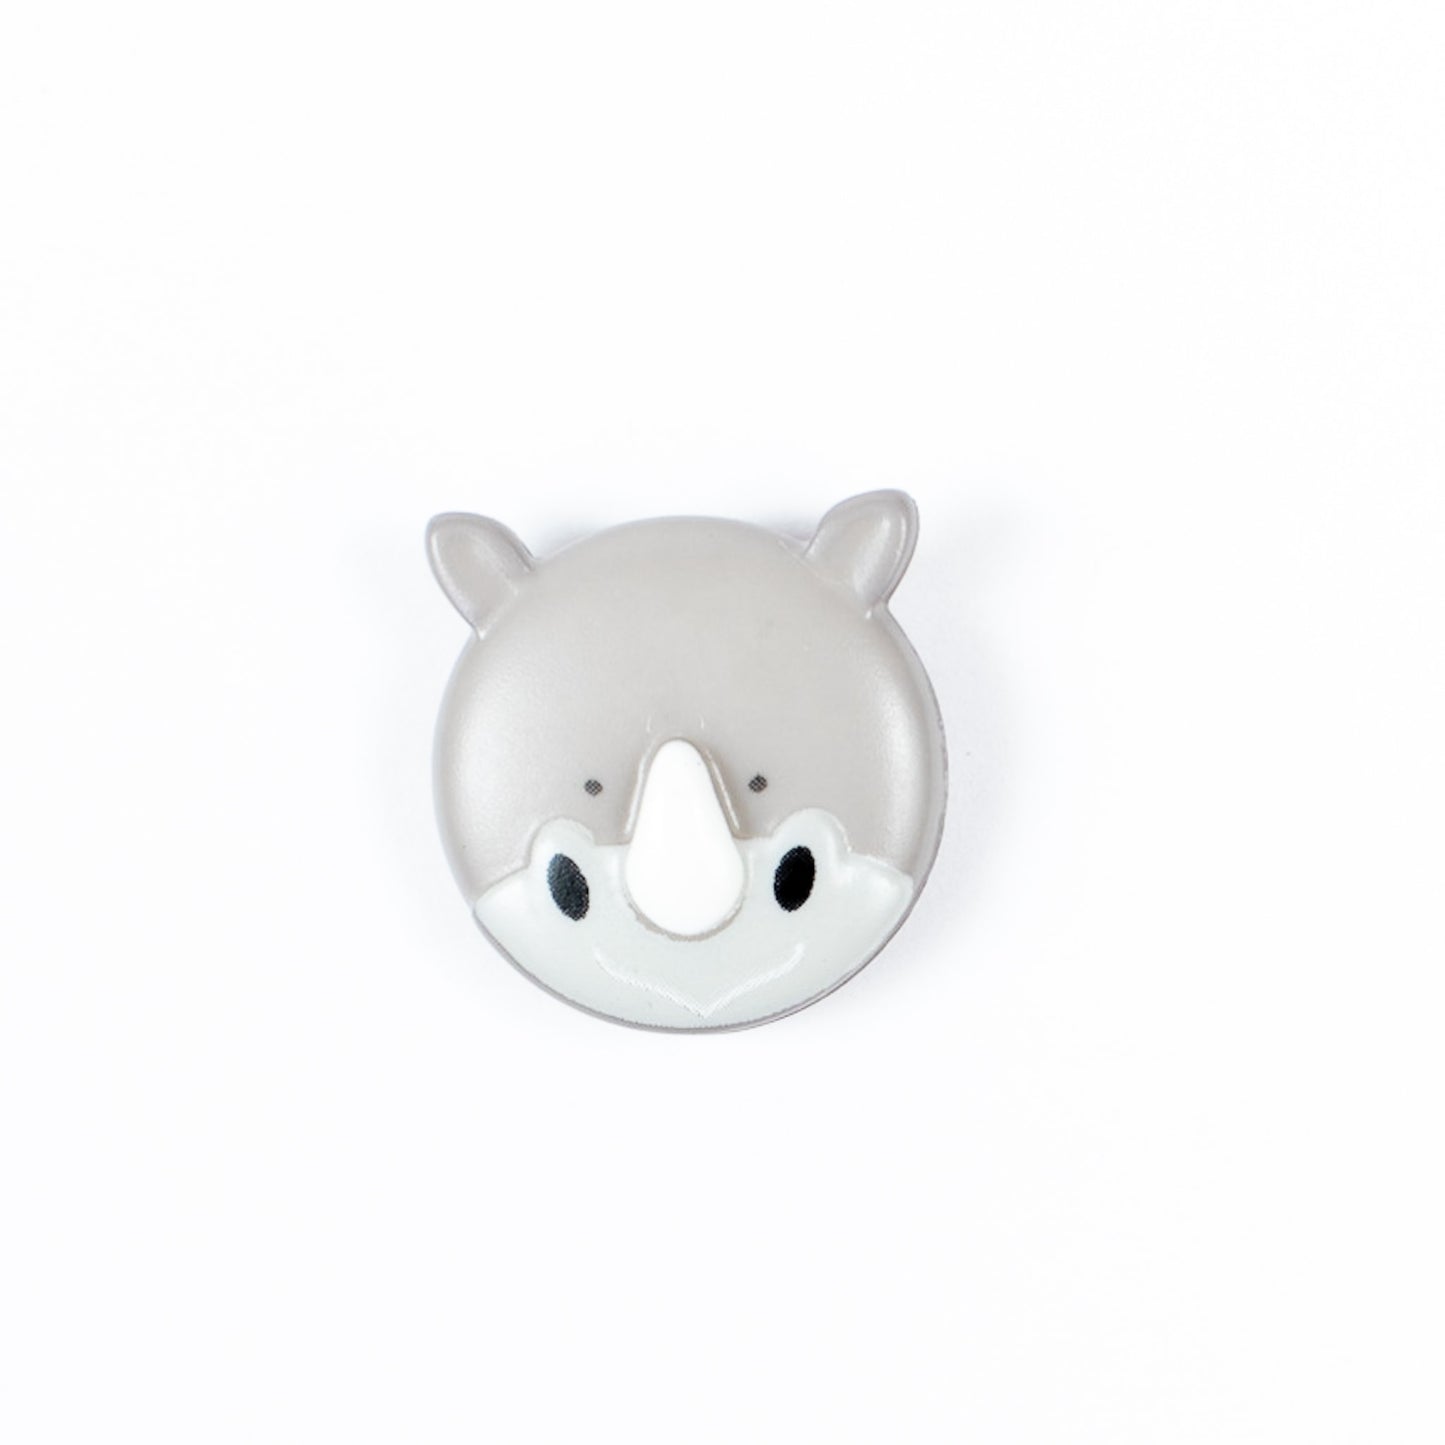 Skacel Buttons Plastic Animal Faces